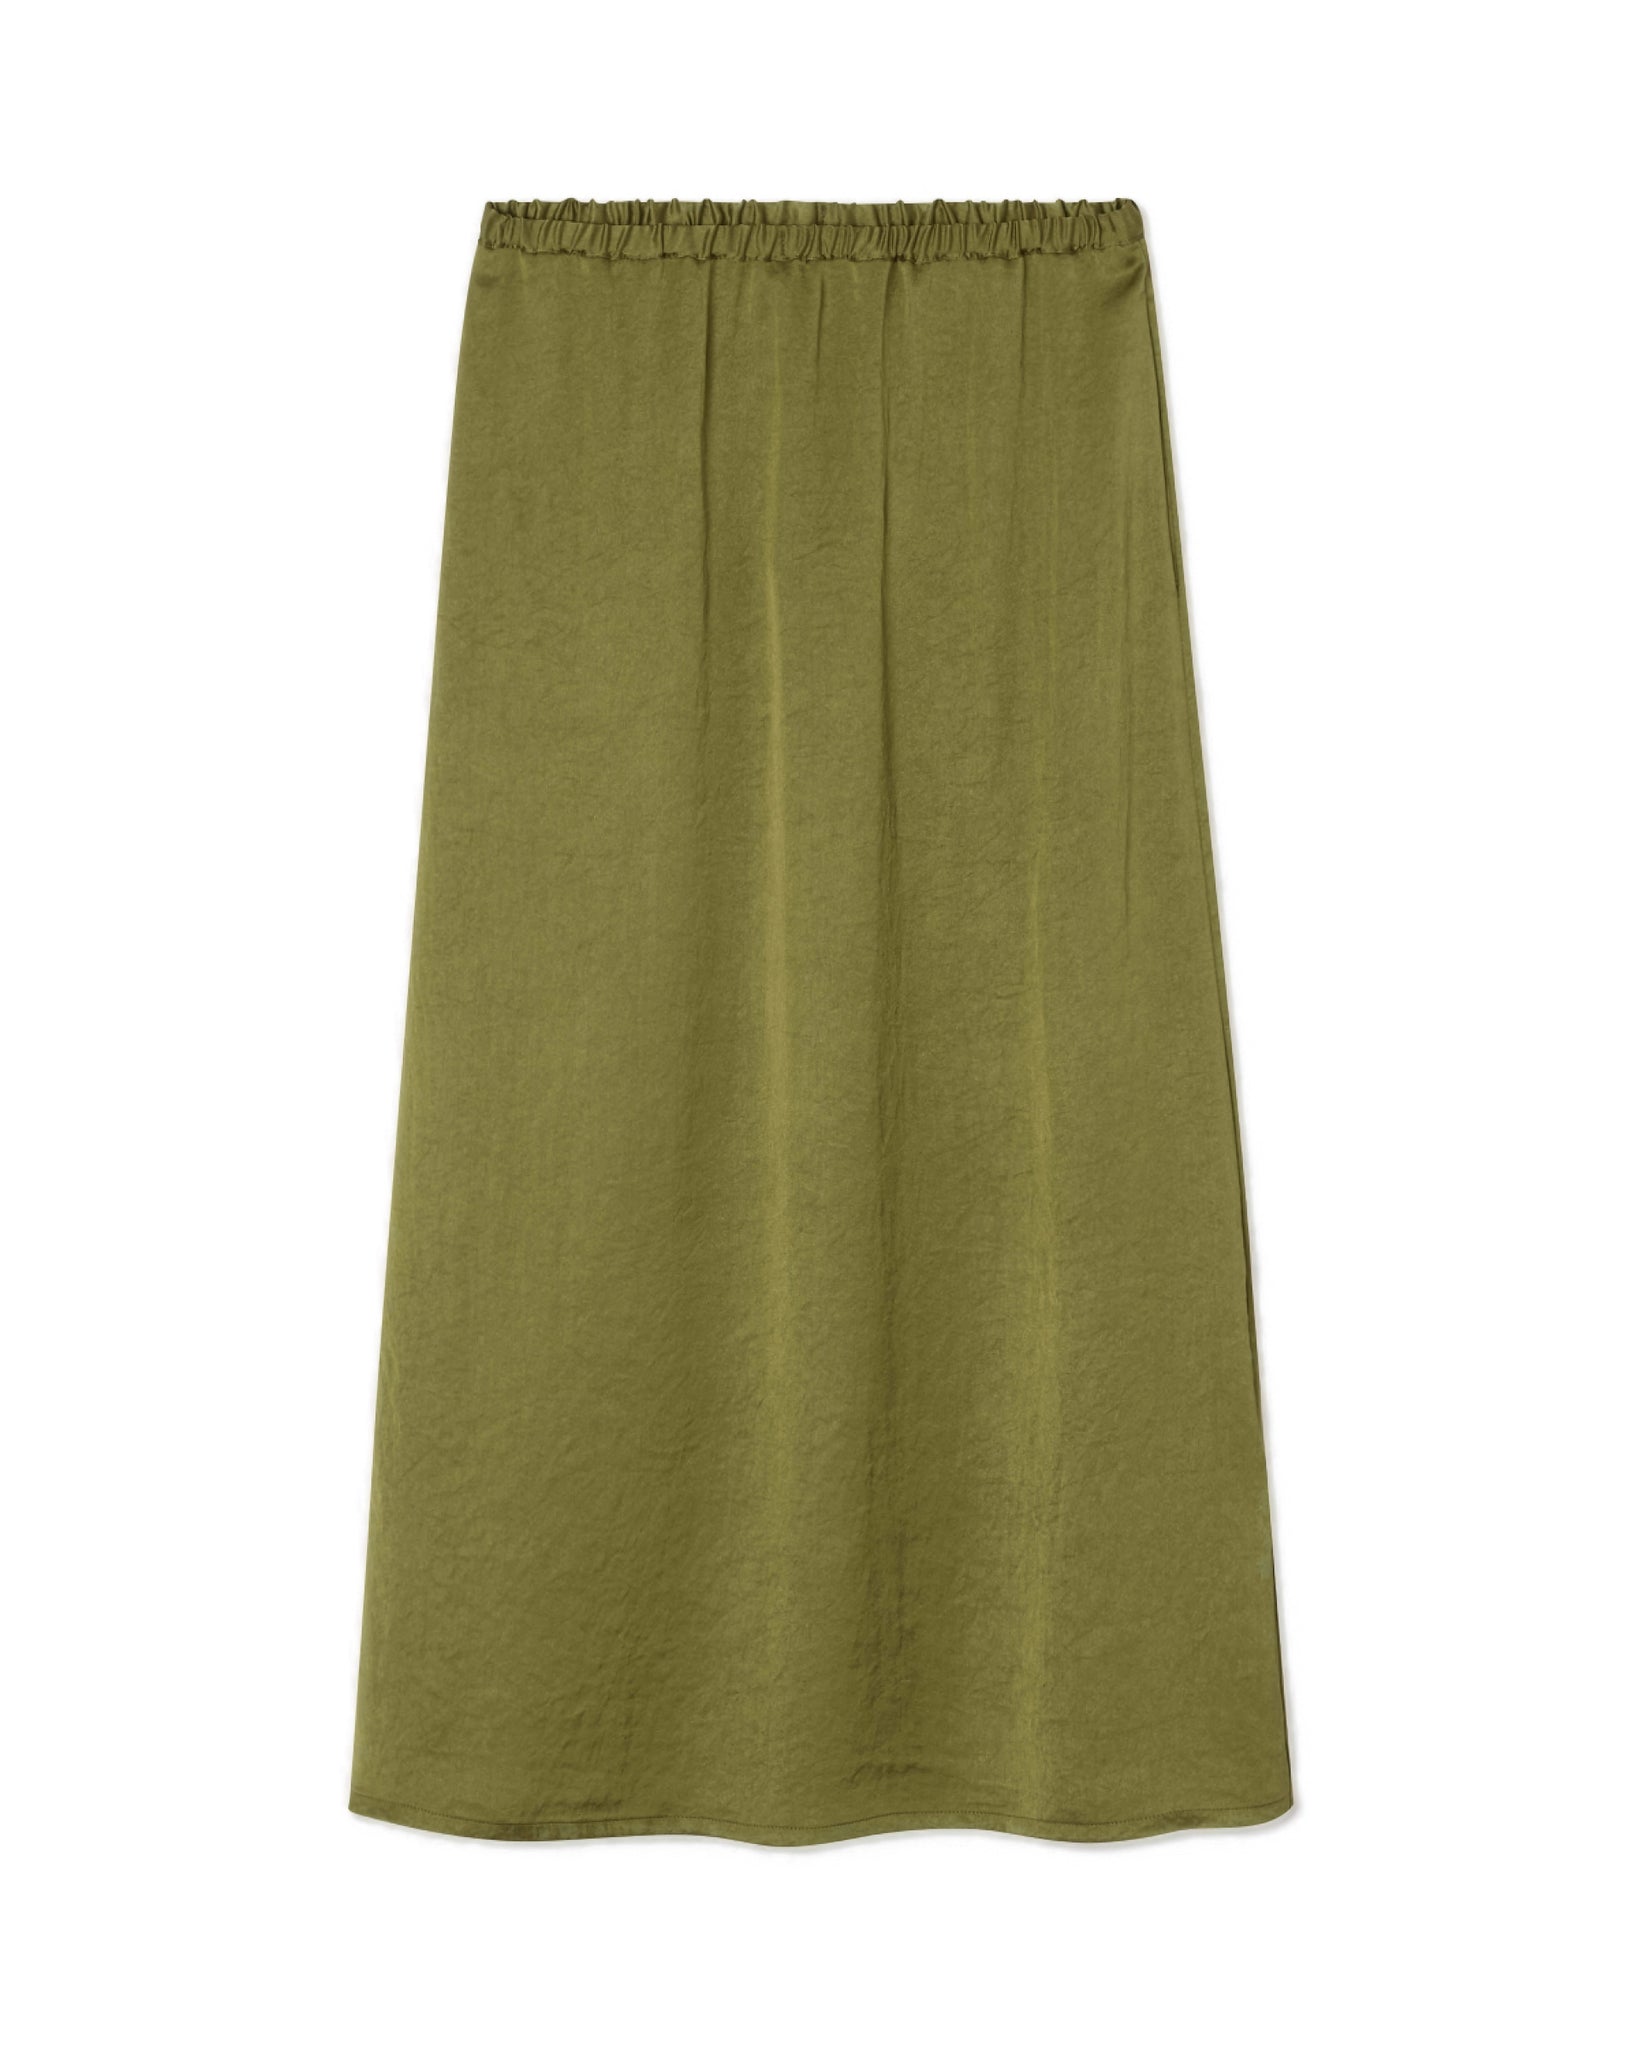 Widland Skirt - Thyme